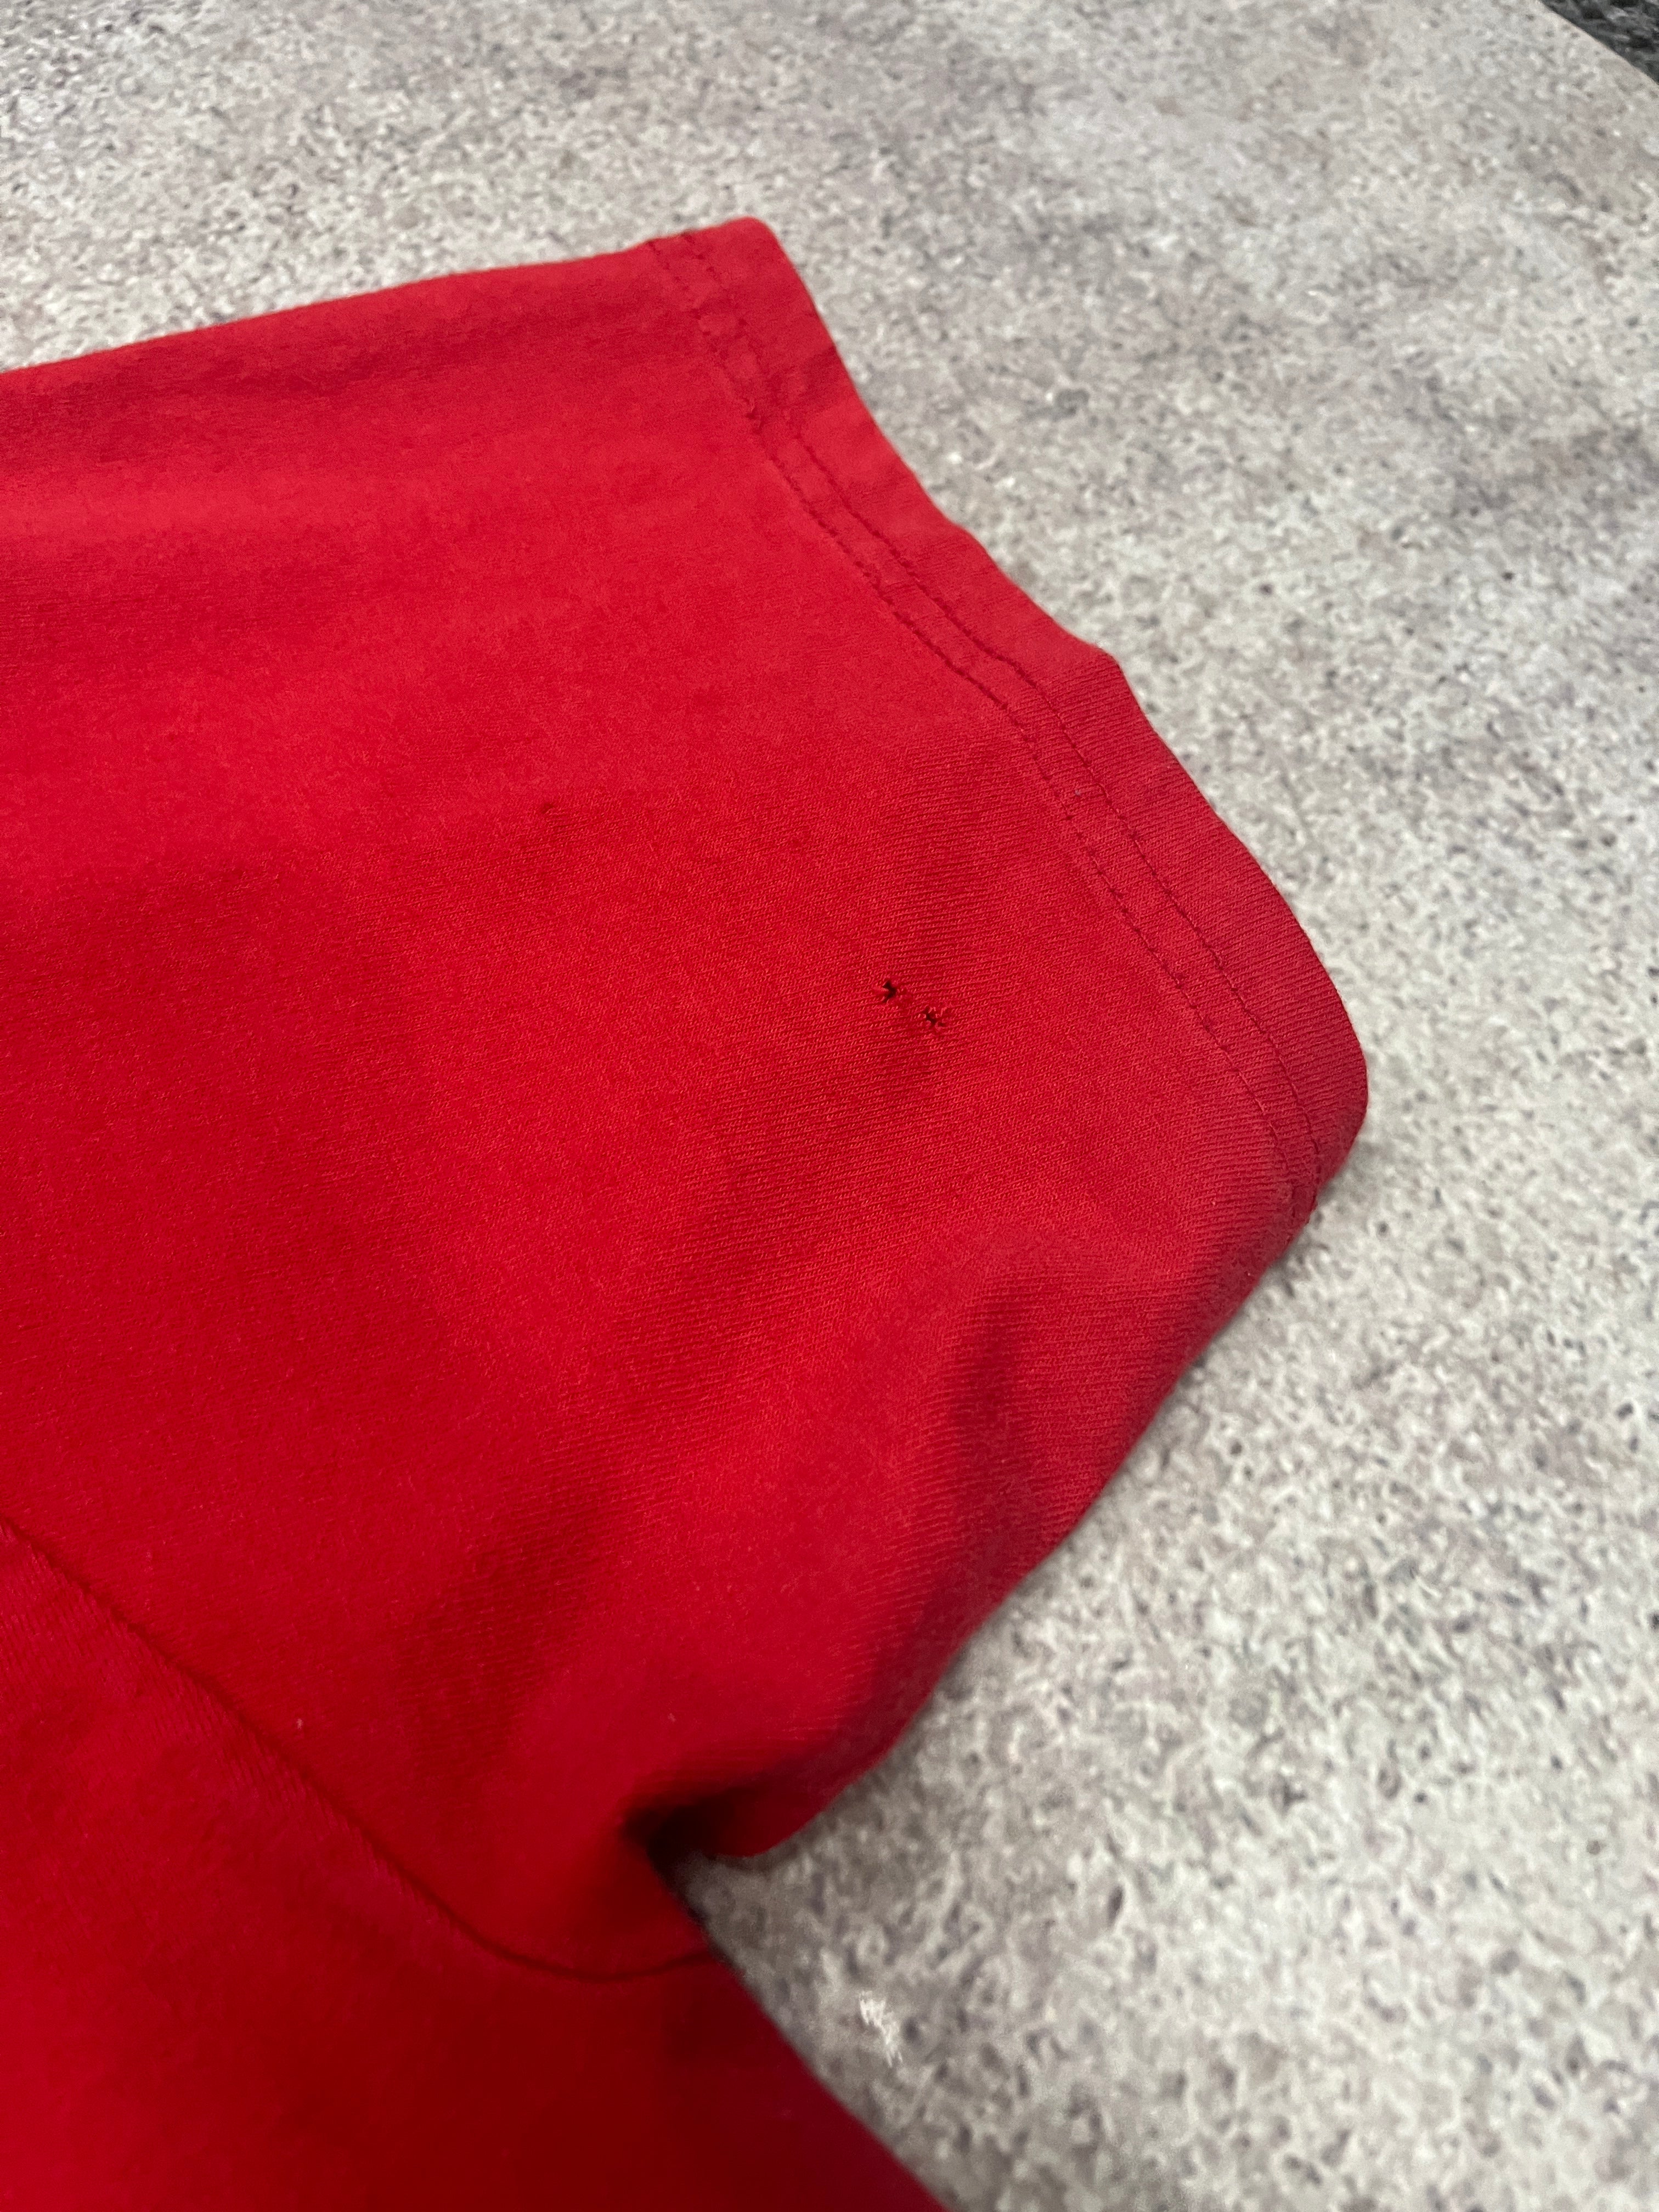 Vintage Nascar Sprint Cup T Shirt Red // Large - RHAGHOUSE VINTAGE